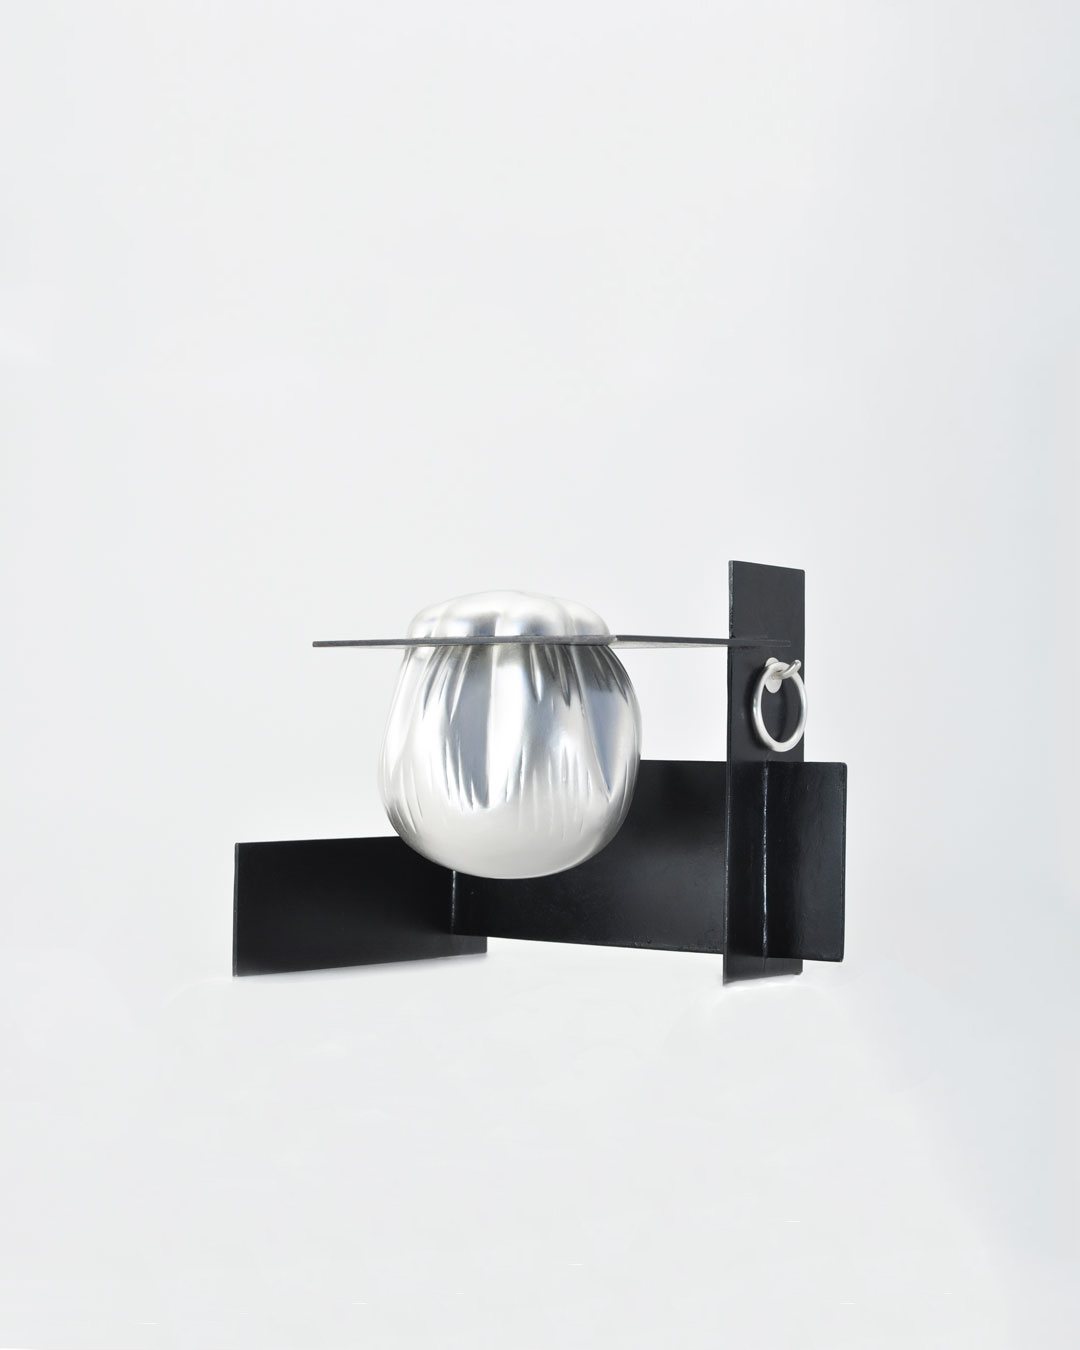 Anders Ljungberg, Bag Beneath #3, 2019, object; silver, steel, 275 x 215 x 210 mm, €7750